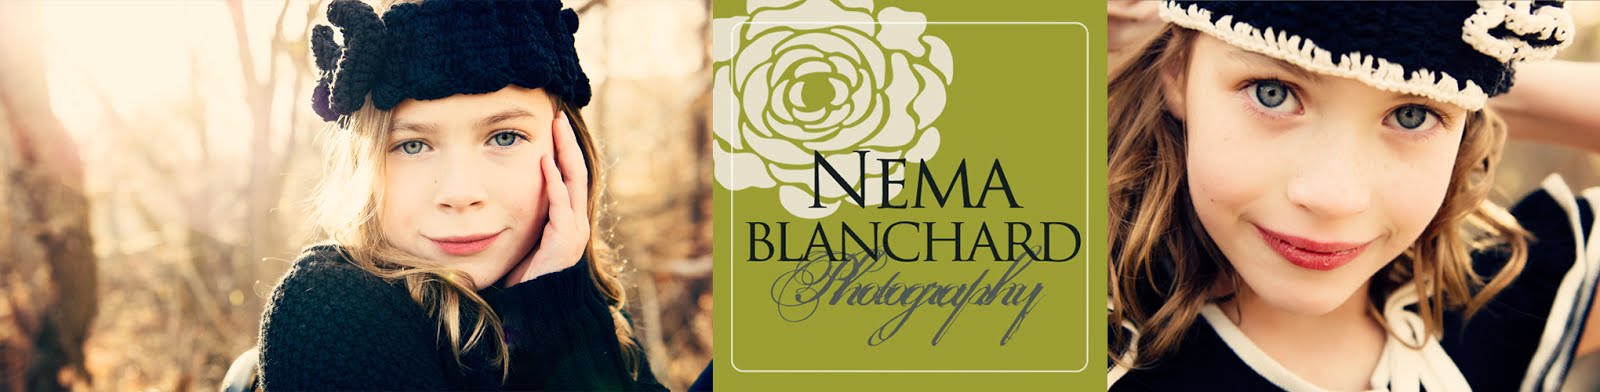 Nema Blanchard Photography